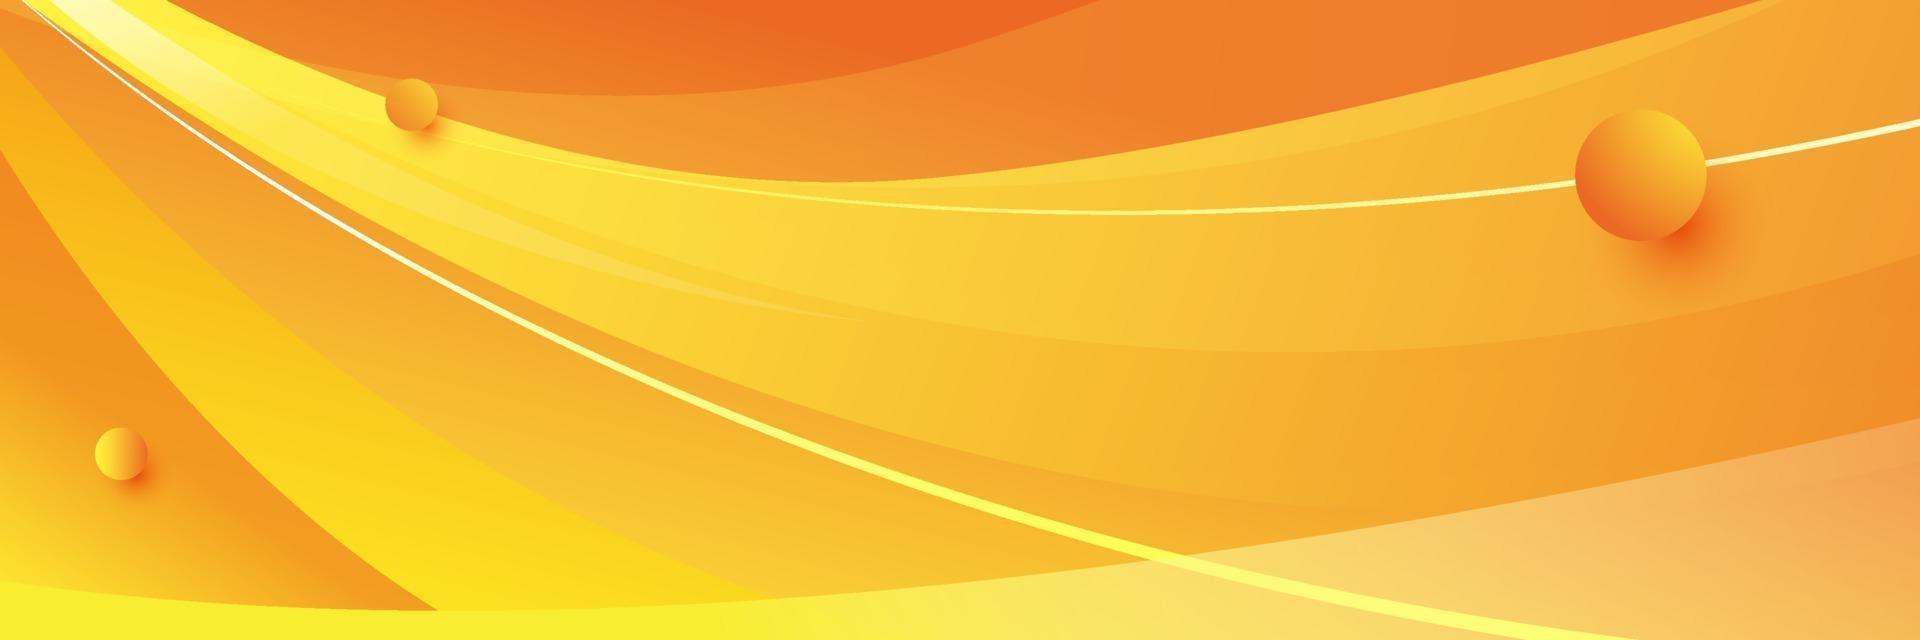 abstrakt orange vågbakgrund vektor